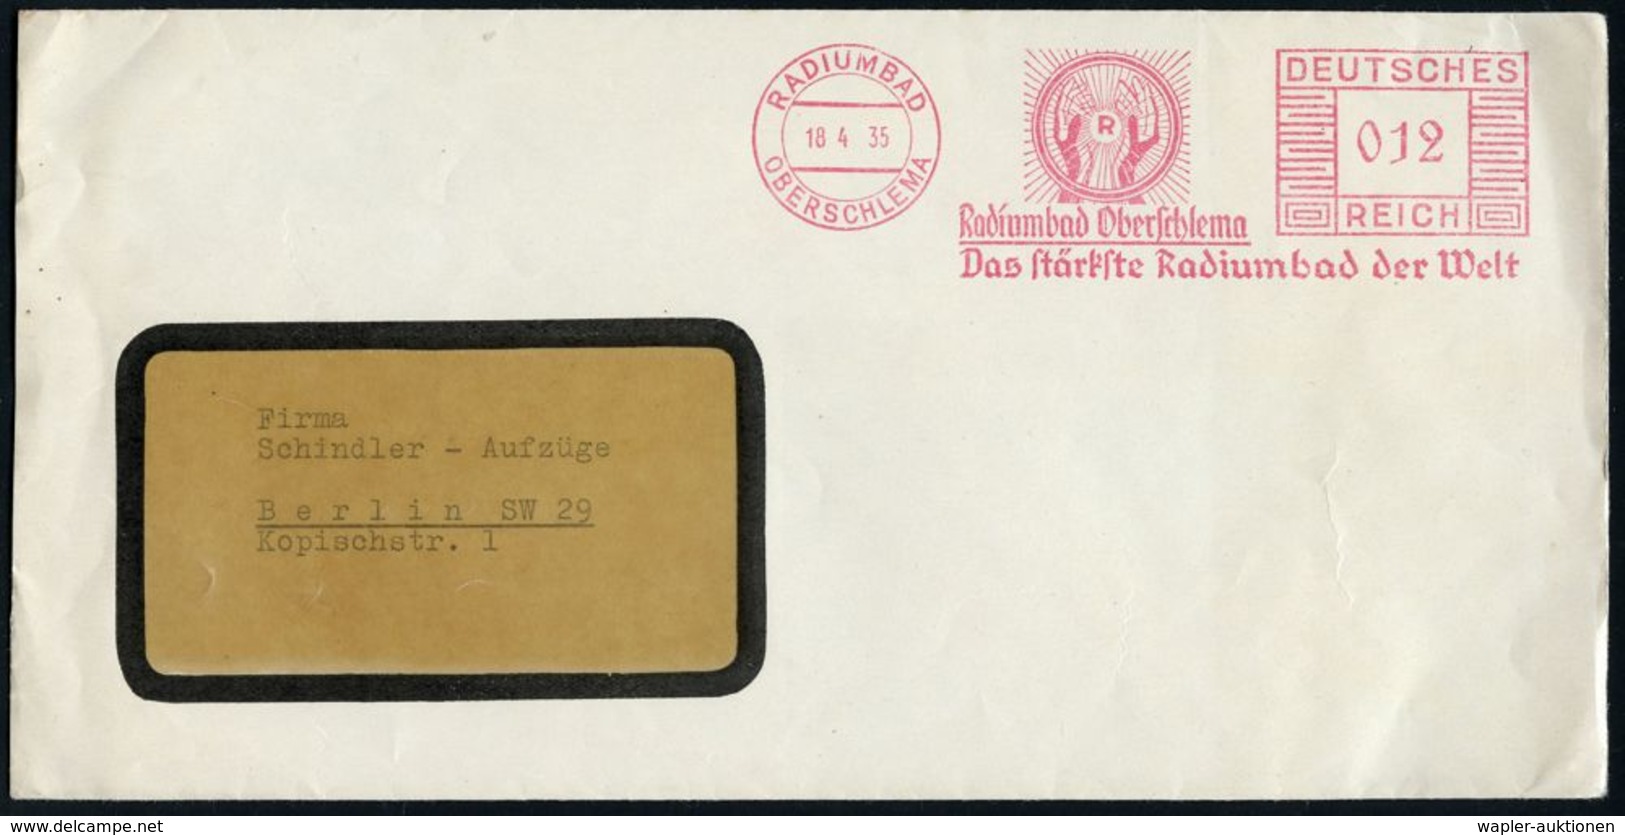 ATOM / KERNENERGIE / RÖNTGEN / RADIOAKTIVITÄT : OBERSCHLEMA RADIUMBAD/ Das Stärkste Radiumbad Der Welt 1935 (18.4.) Selt - Atomo